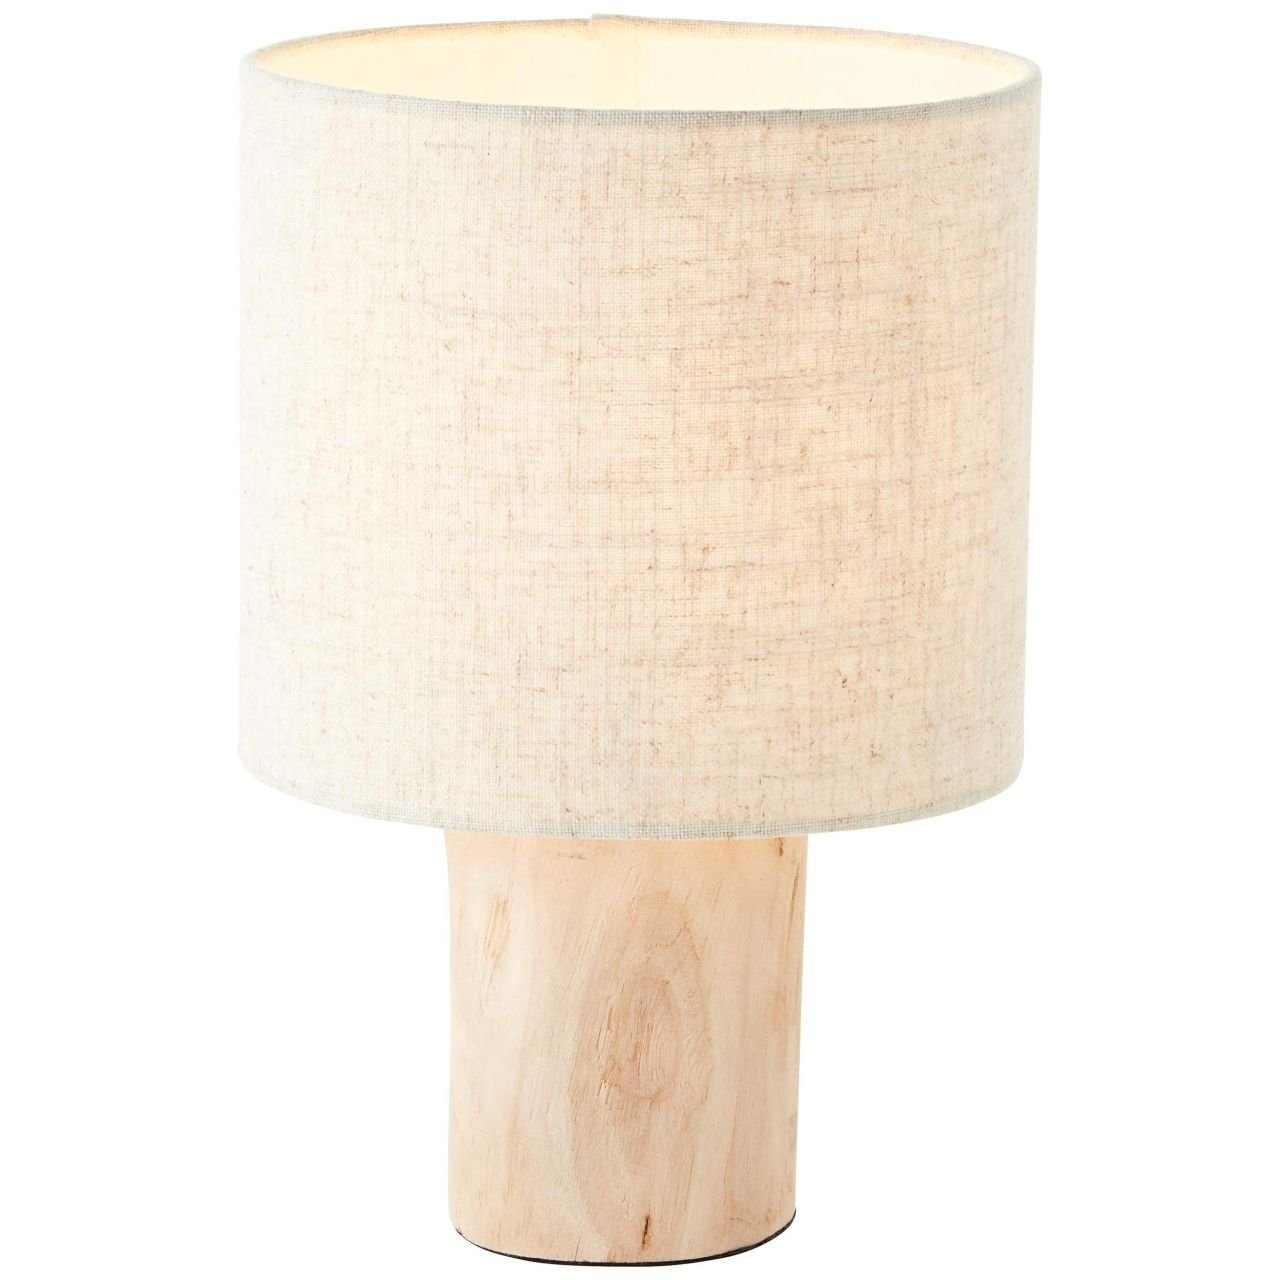 Holz Lampe, Tischleuchte Tischleuchte Brilliant A60, Pia, natur, 1x Pia 40W, nachhaltiger aus E27,